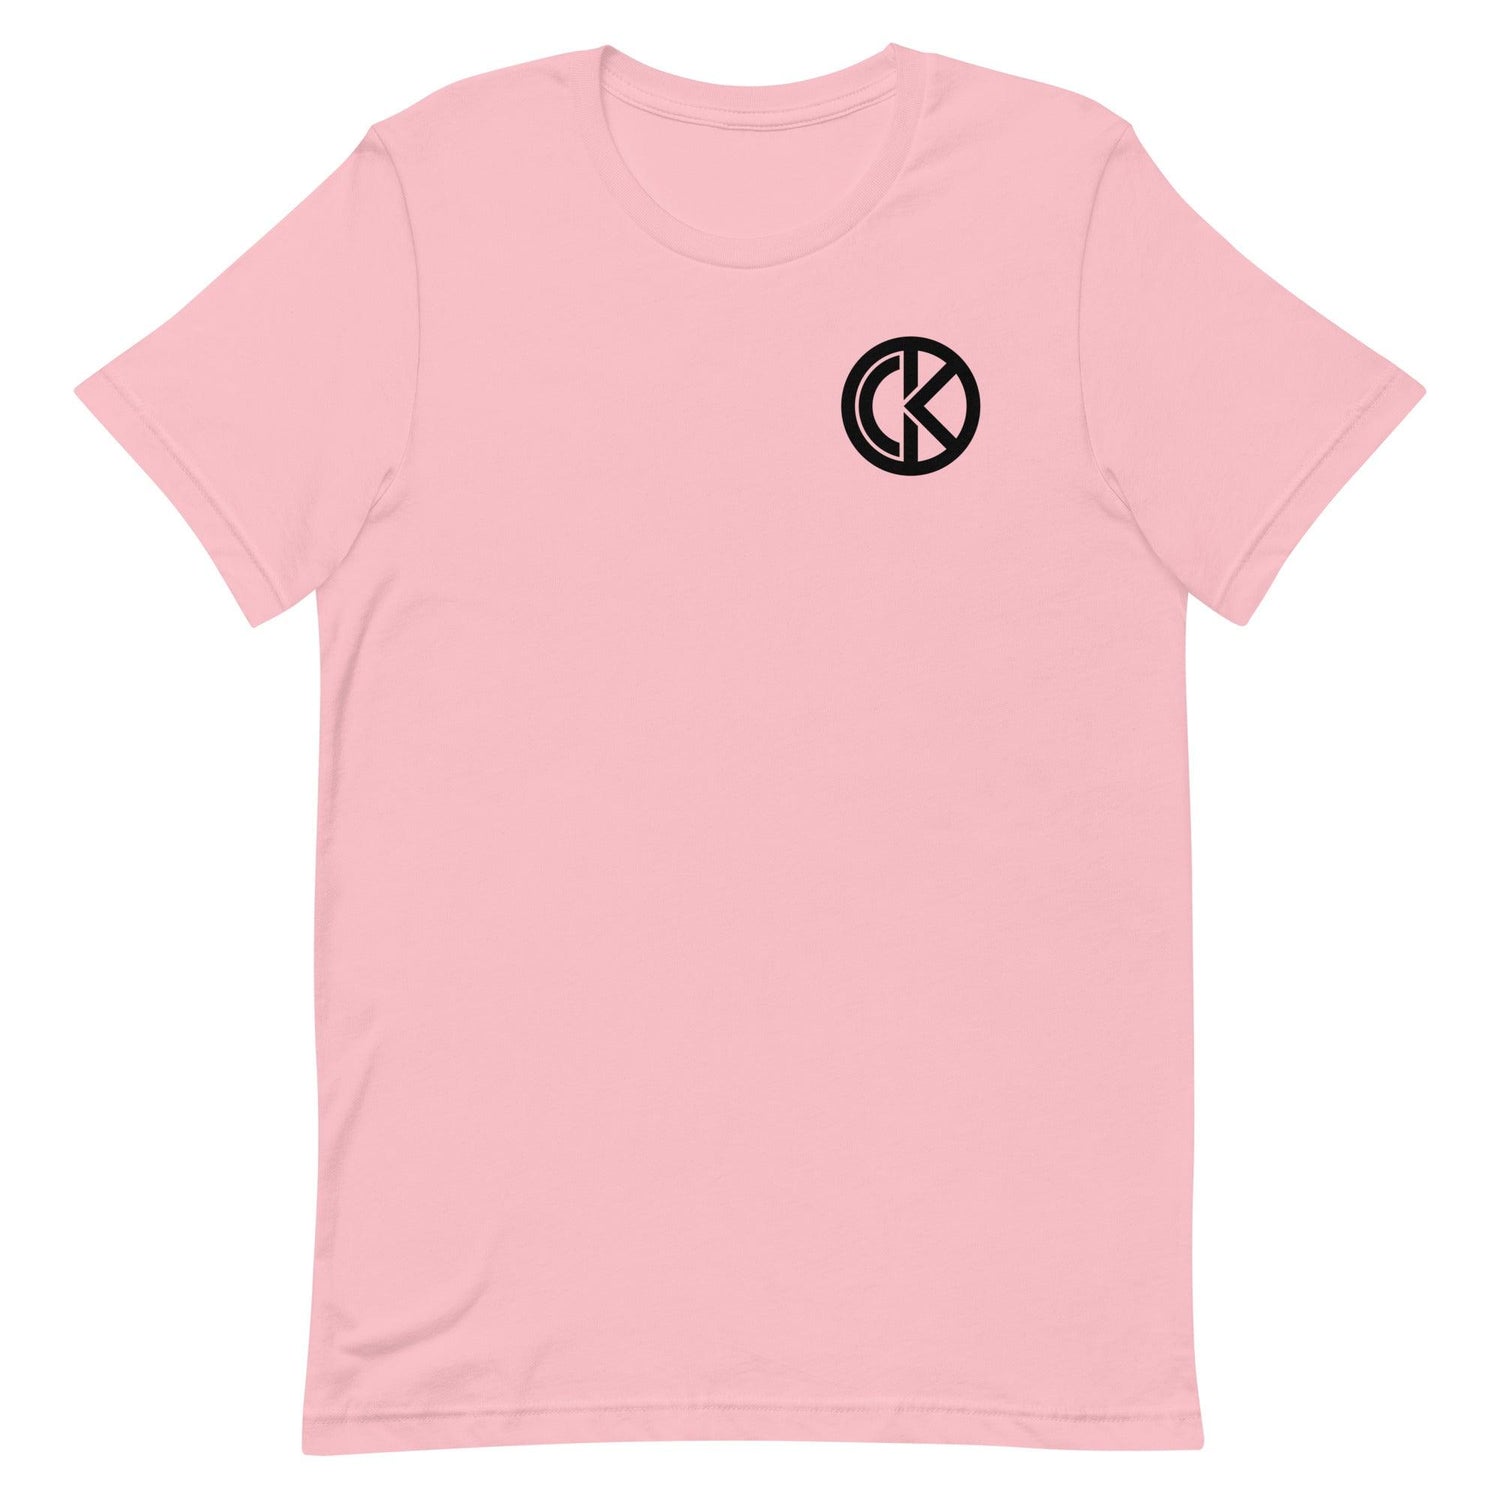 Caitlyn Kroll "CK" t-shirt - Fan Arch